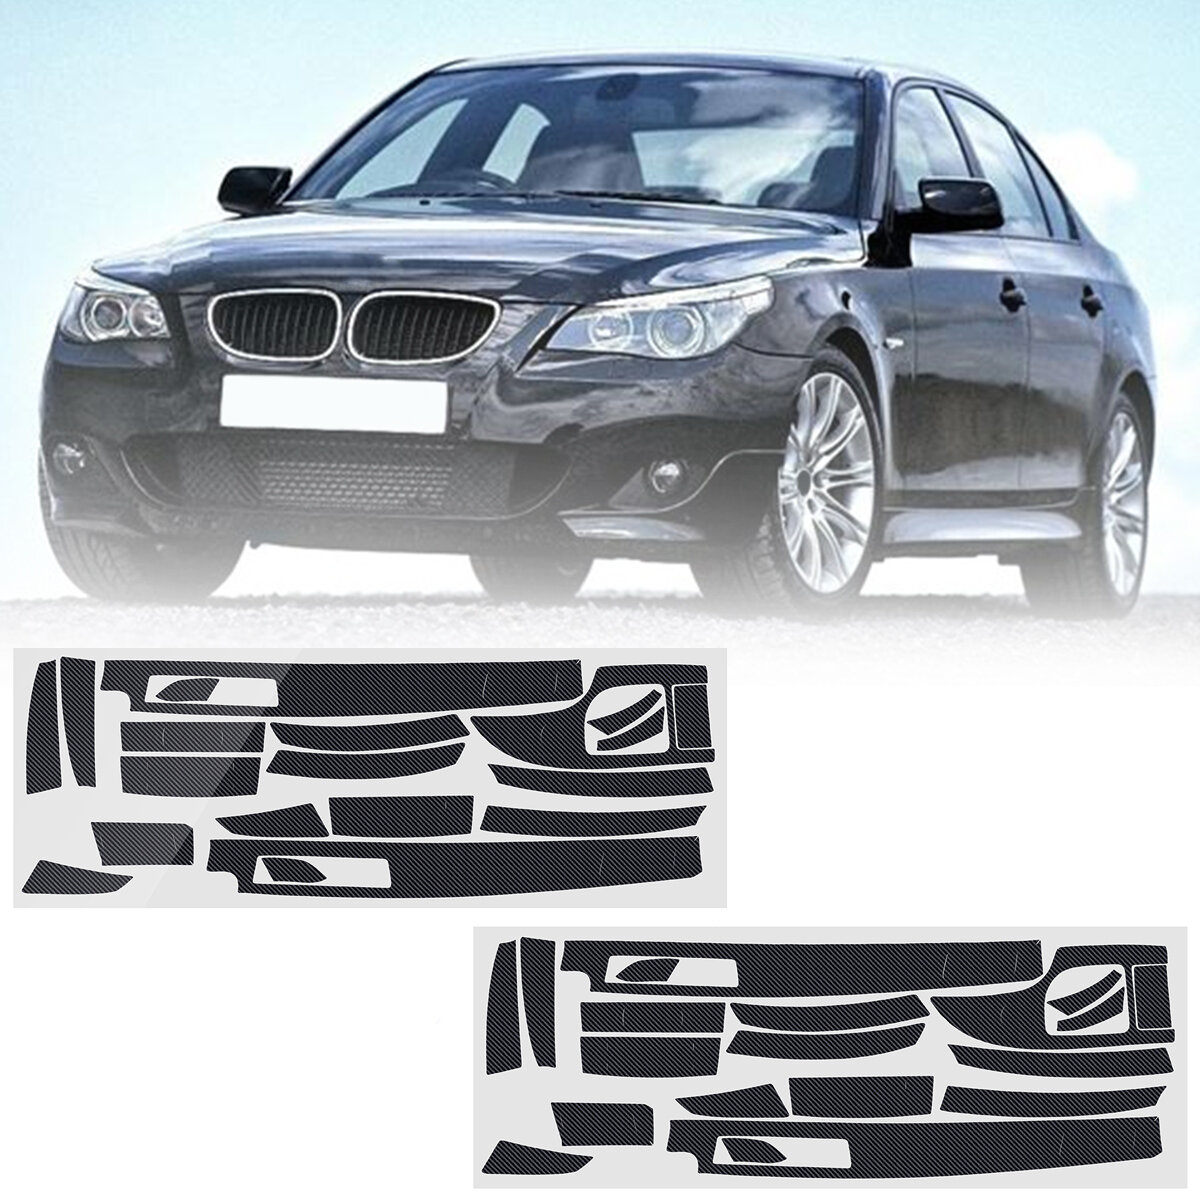 Carbon Fiber Pattern Car Interior Armaturenbrett Aufkleber Wrap Dekoration Links Hand Fahren Fur Bmw 5er E60 2003 2010